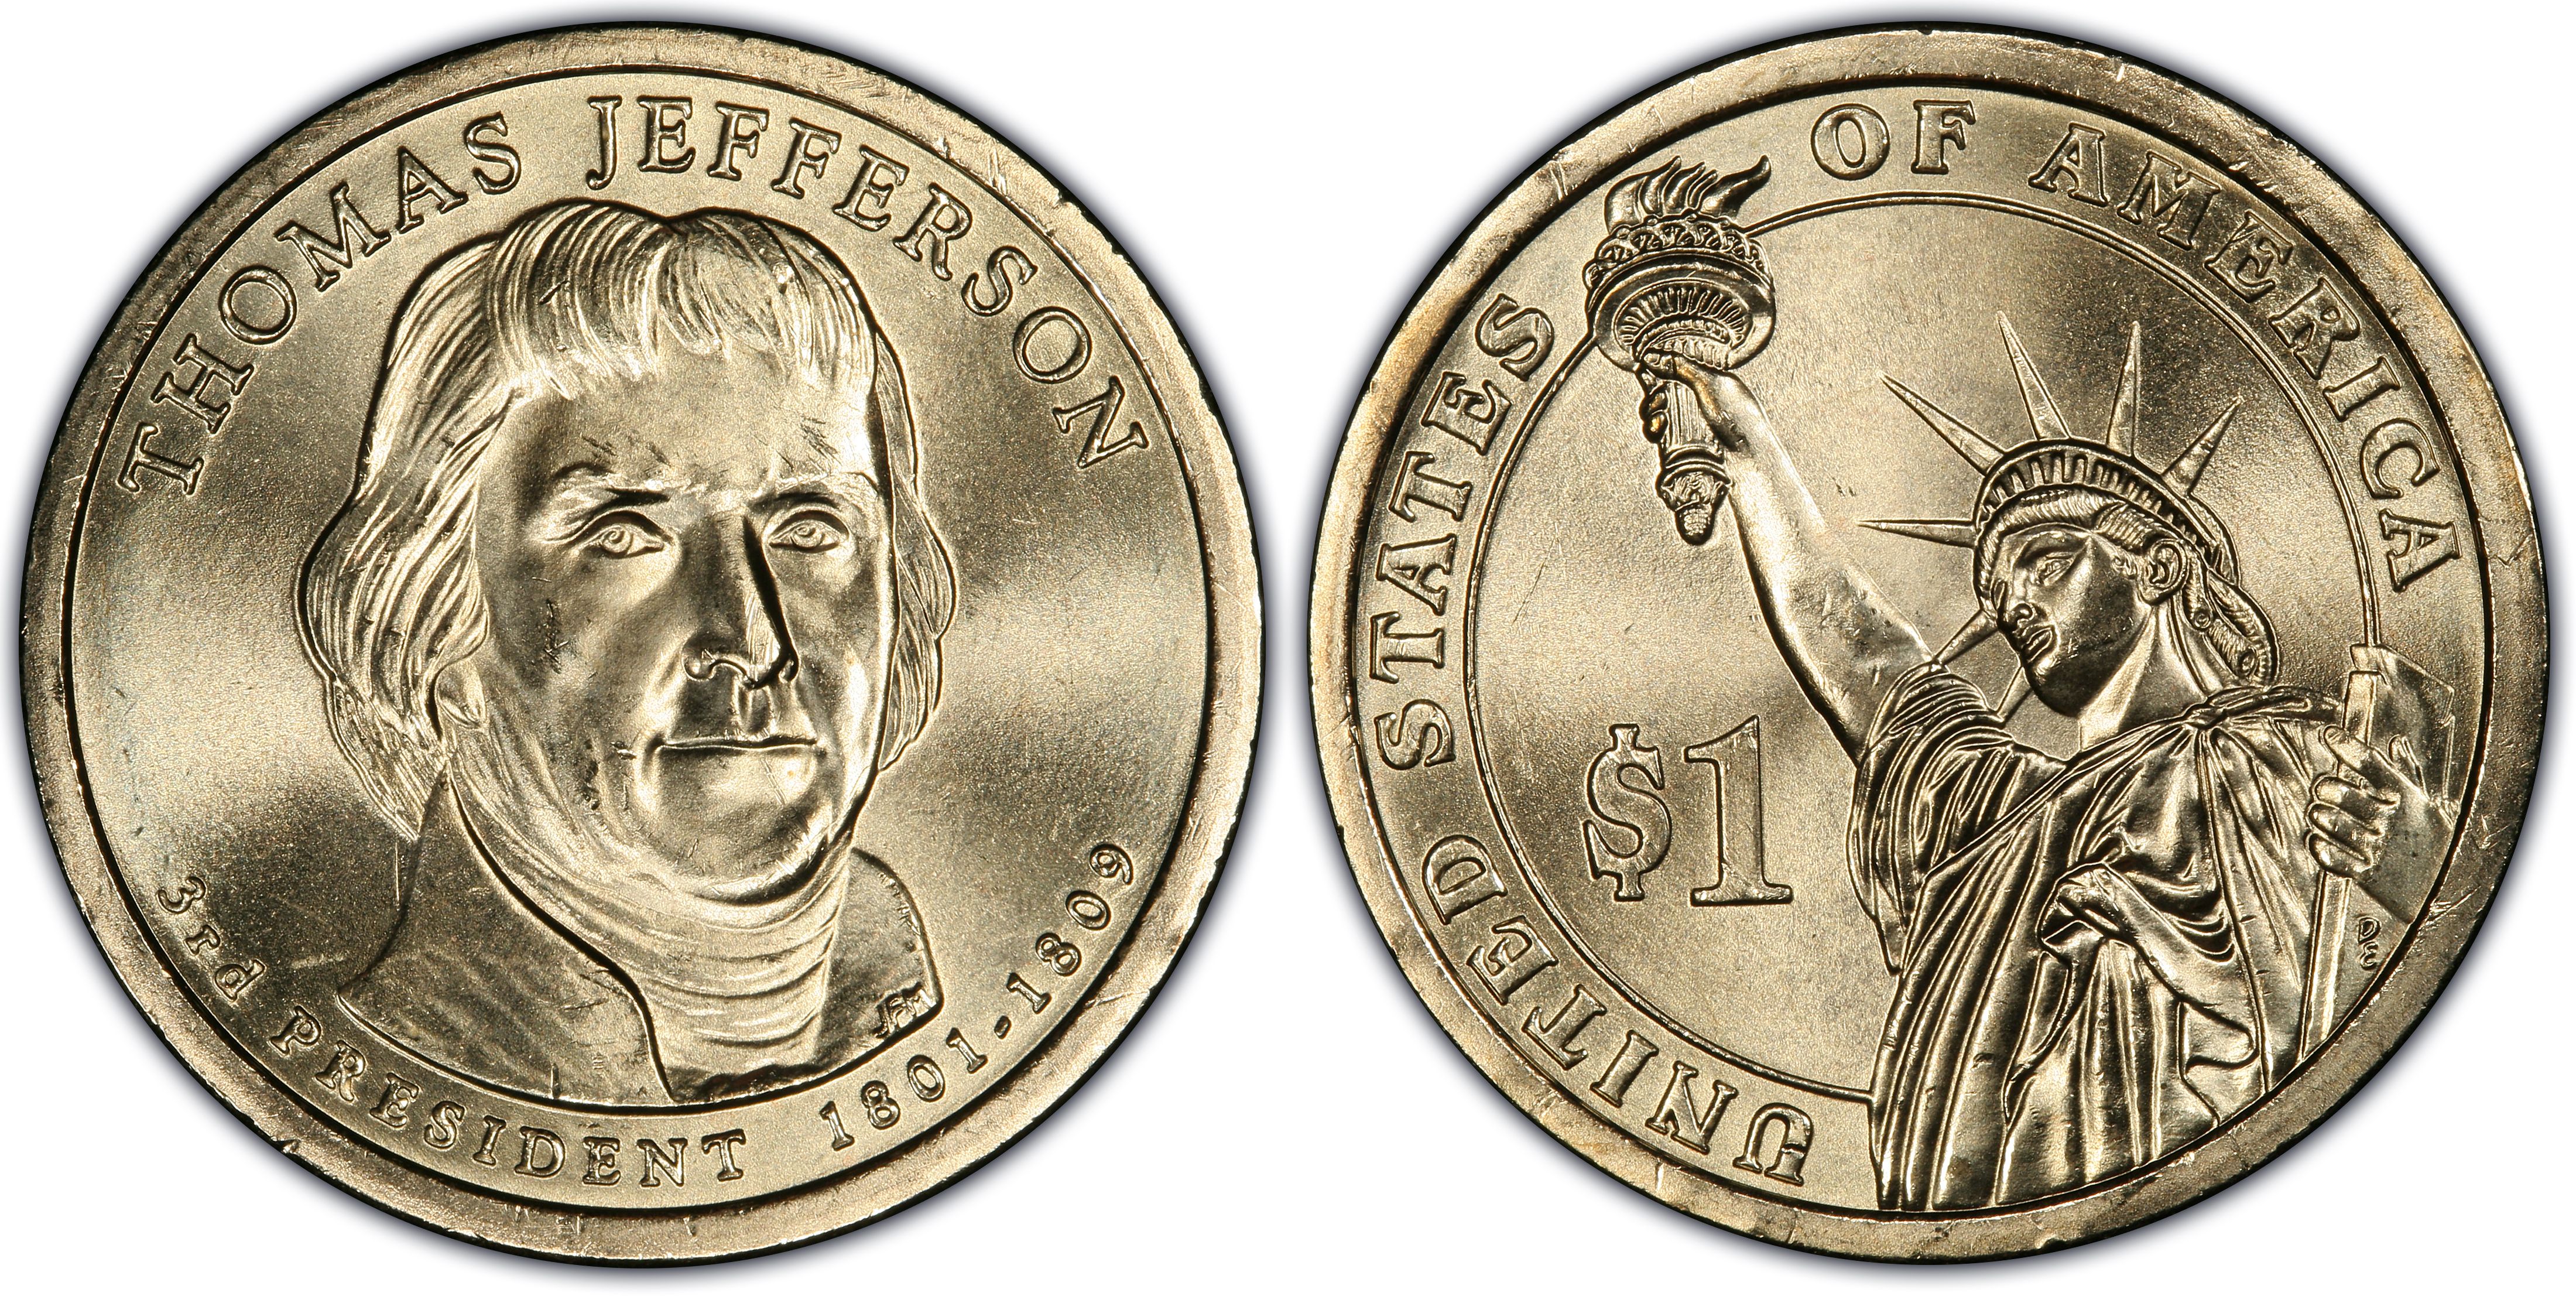 Mint Money Details about   2007 P&D Thomas Jefferson Presidential One Dollar Coins U.S